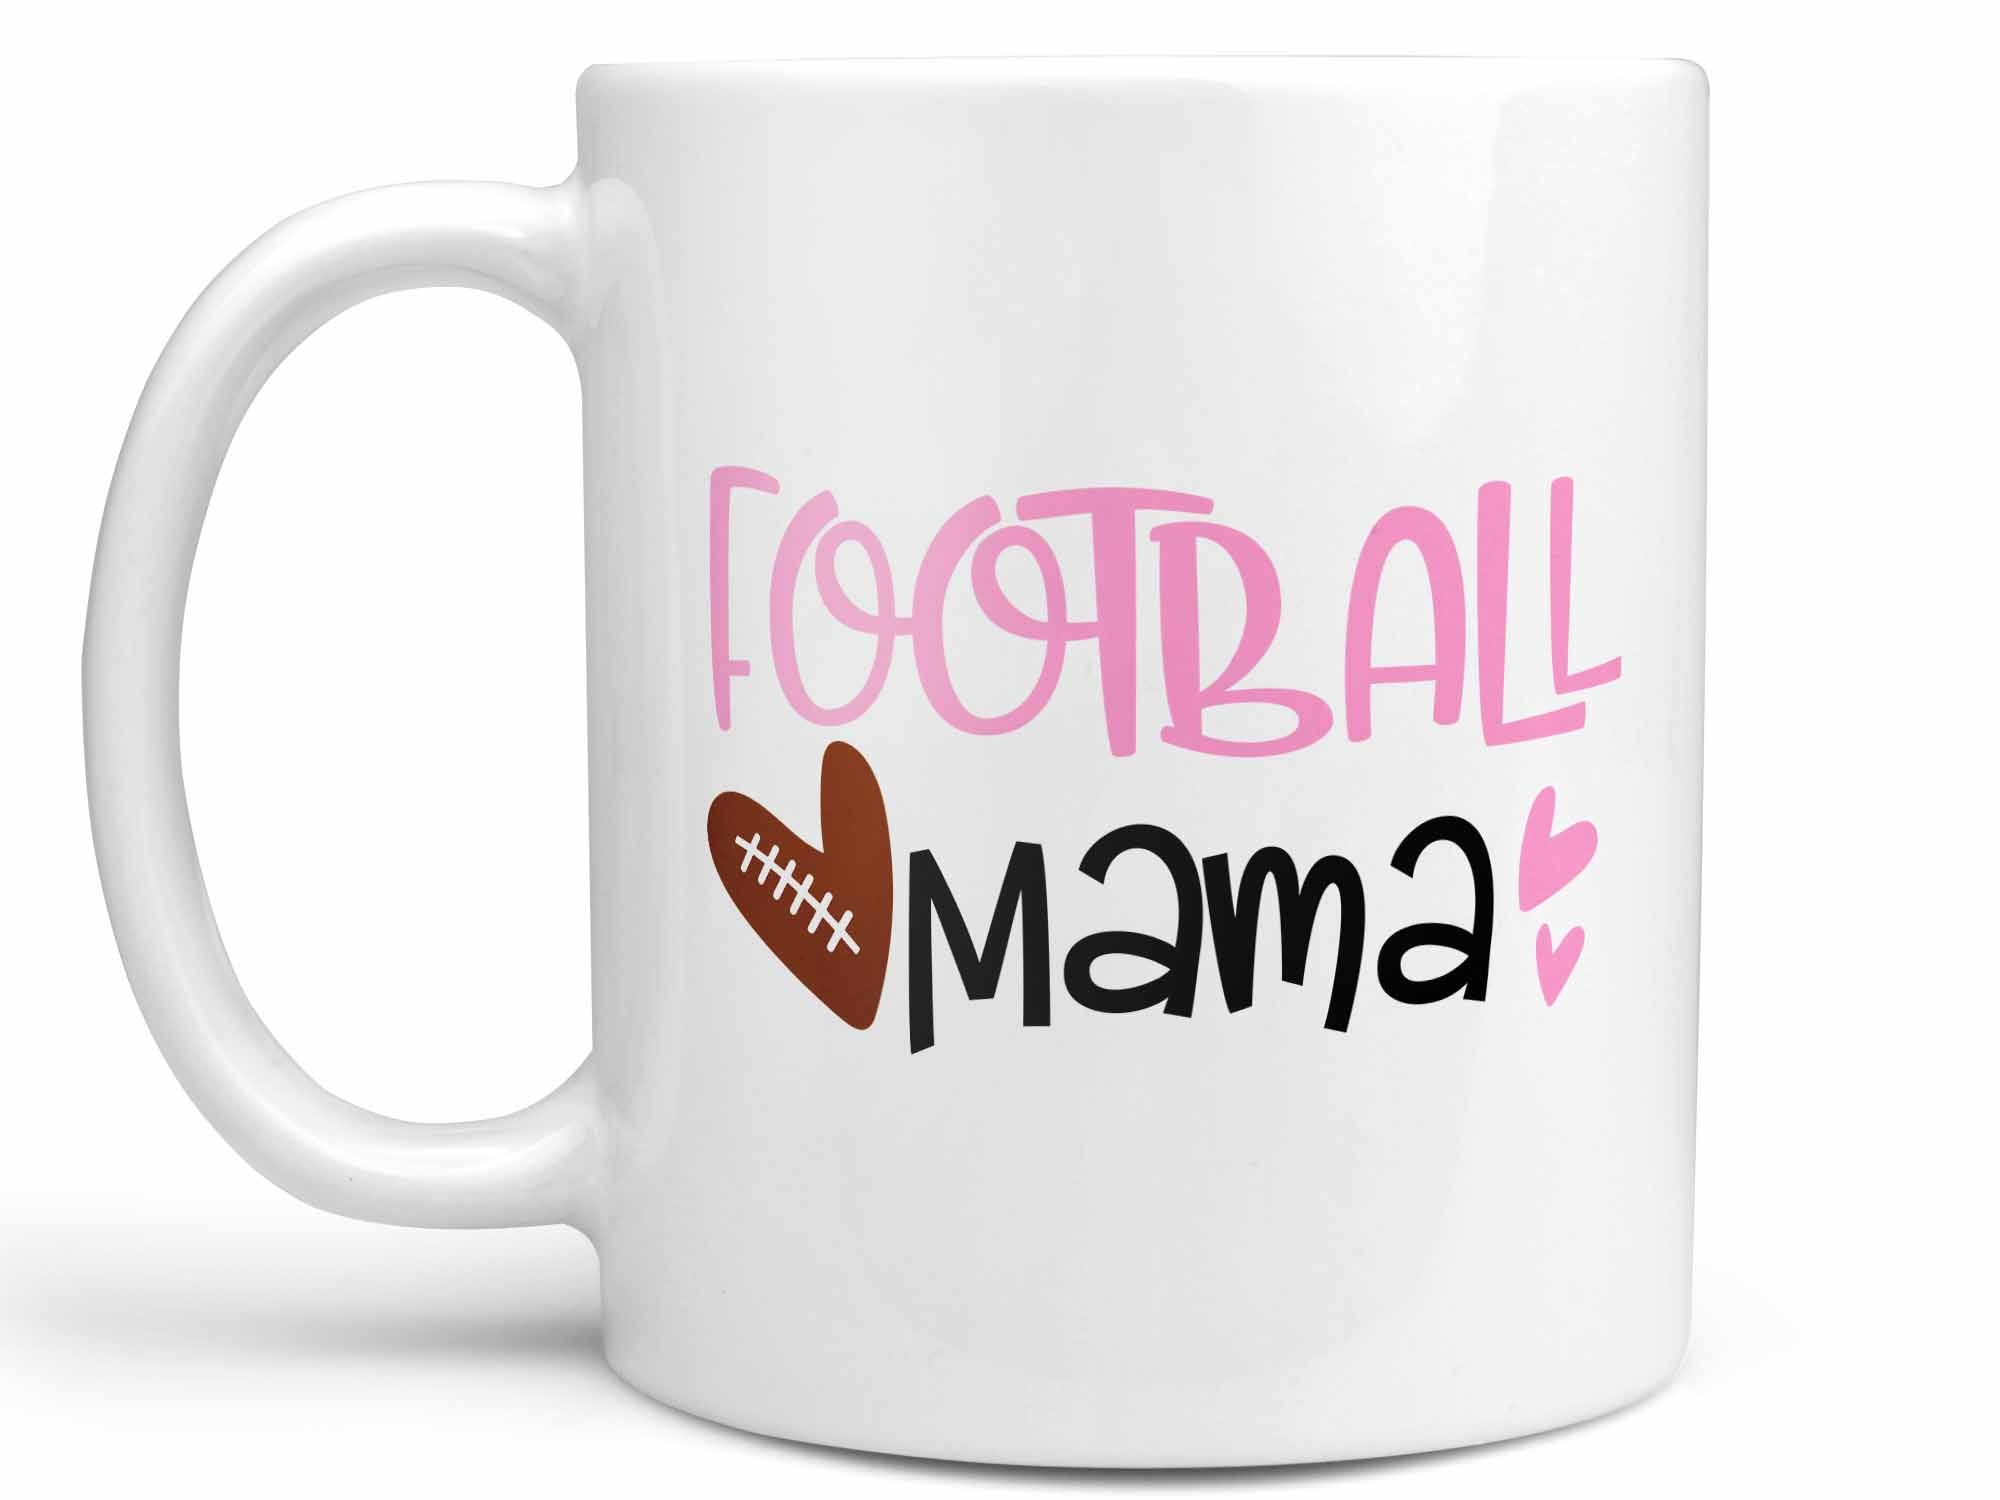 Football Mama Coffee Mug,Coffee Mugs Never Lie,Coffee Mug